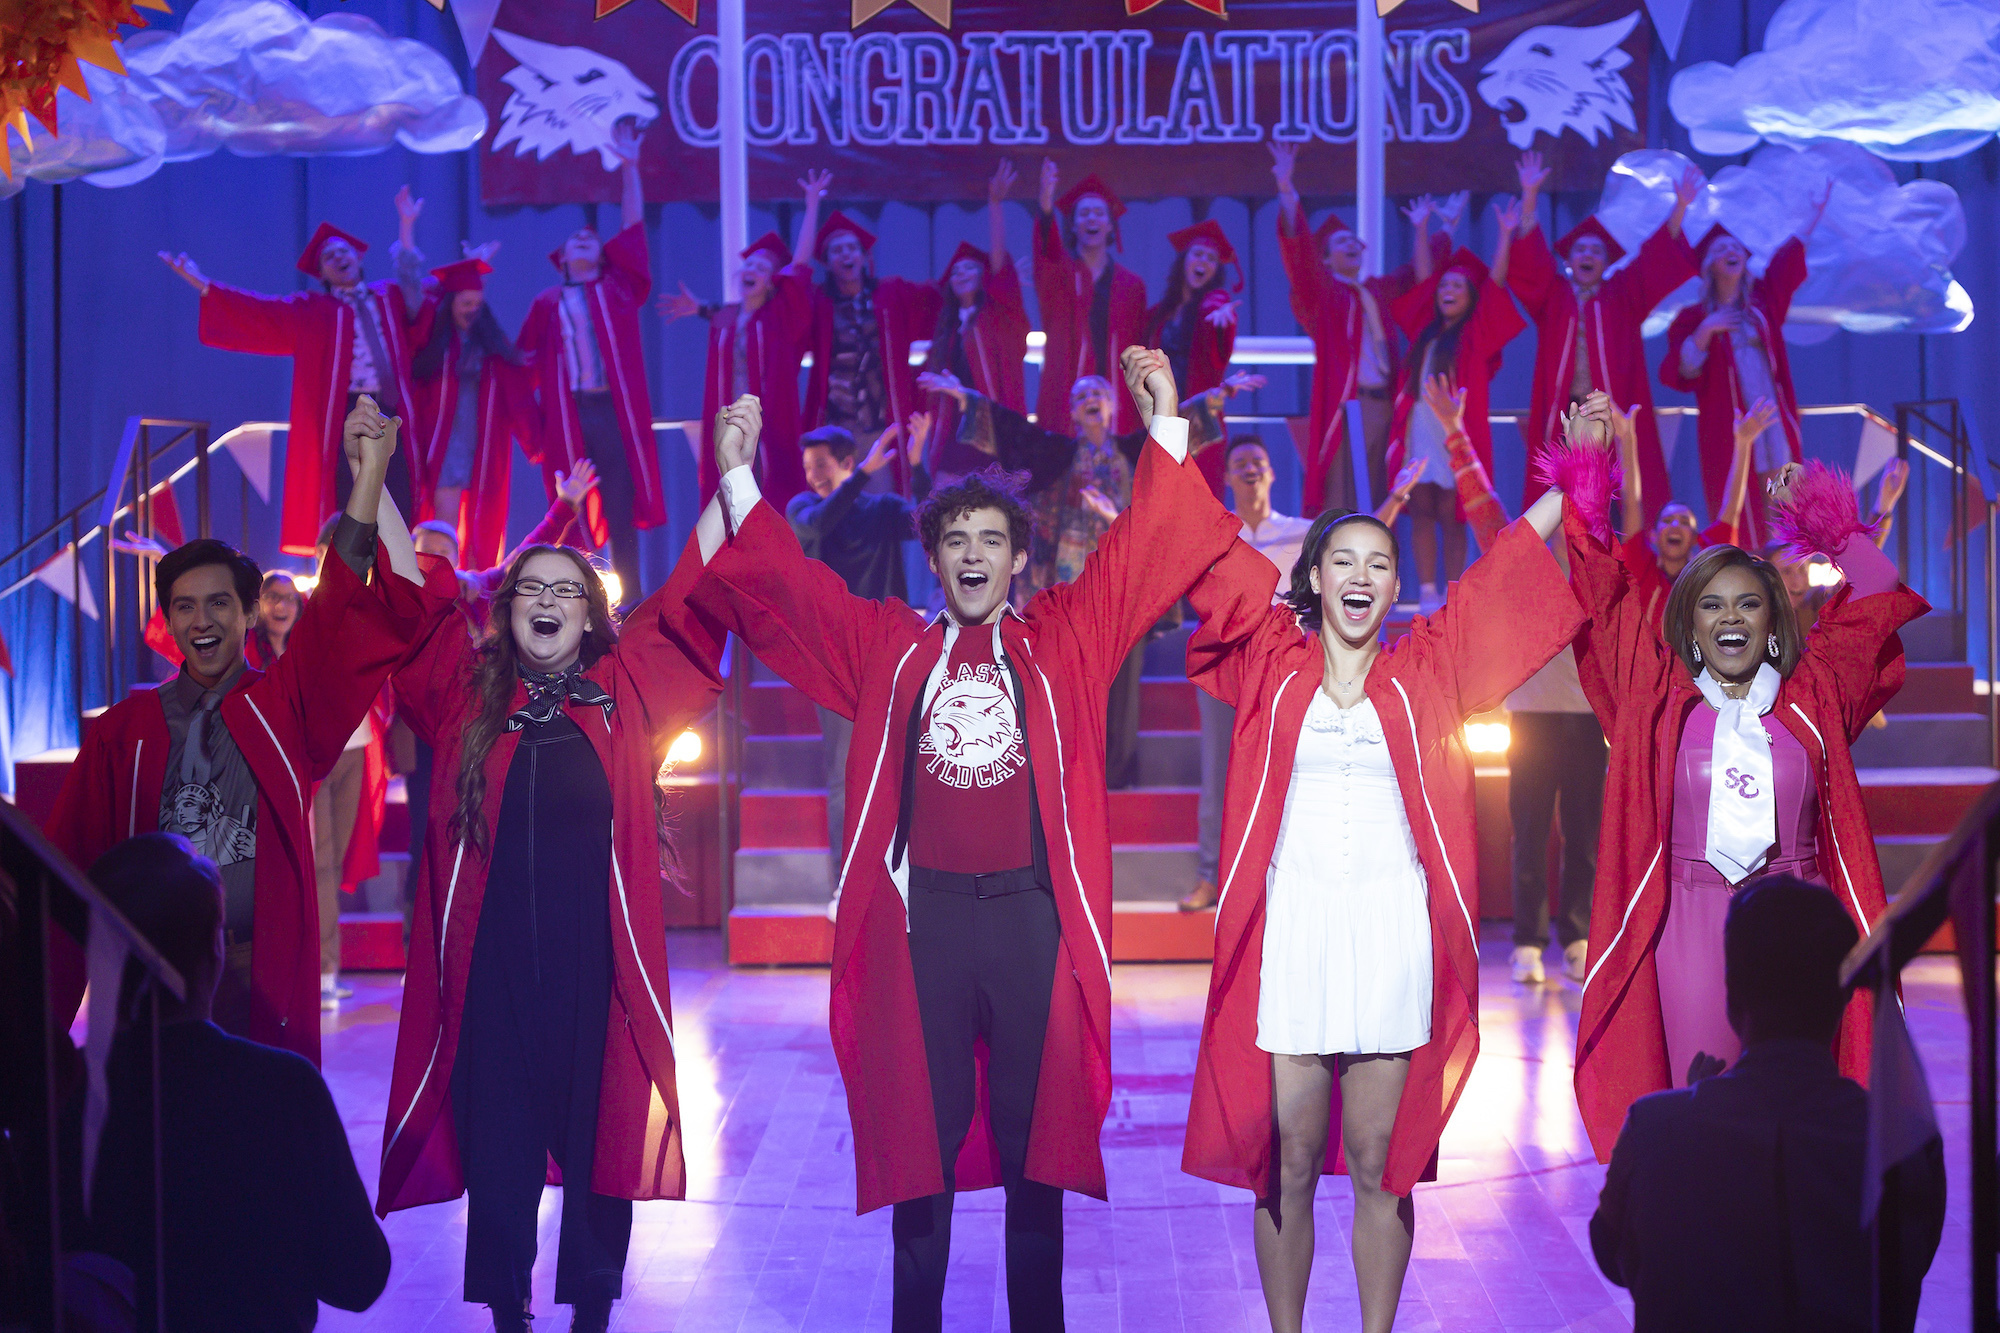 High School Musical: The Musical: The Series (TV Series 2019–2023